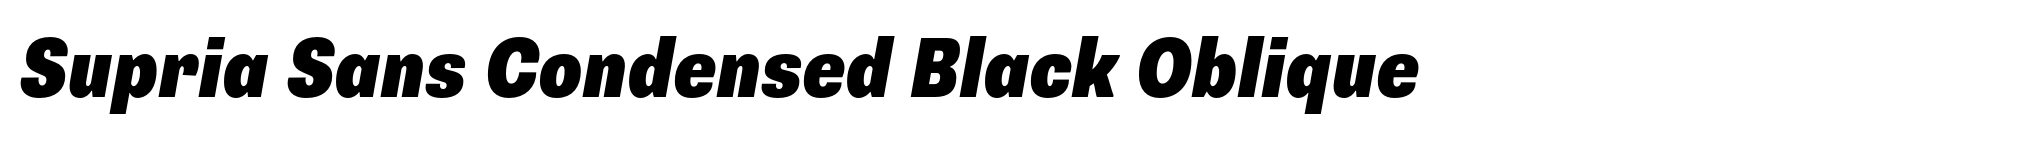 Supria Sans Condensed Black Oblique image